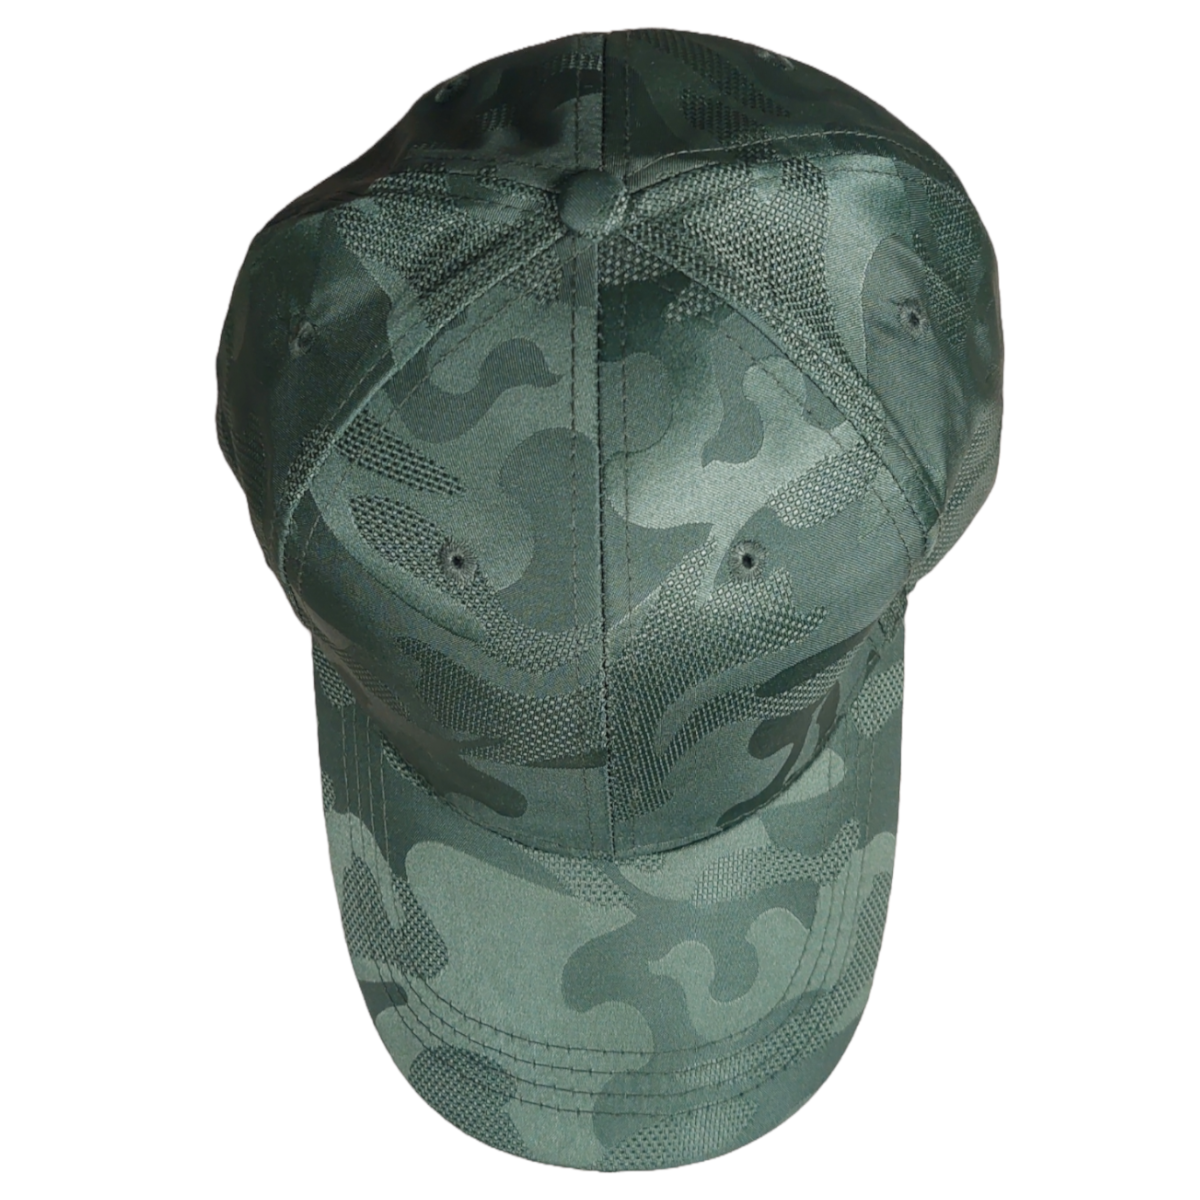 Camouflage Grün Tarnfarbe Caps Basecap Kappe Mütze